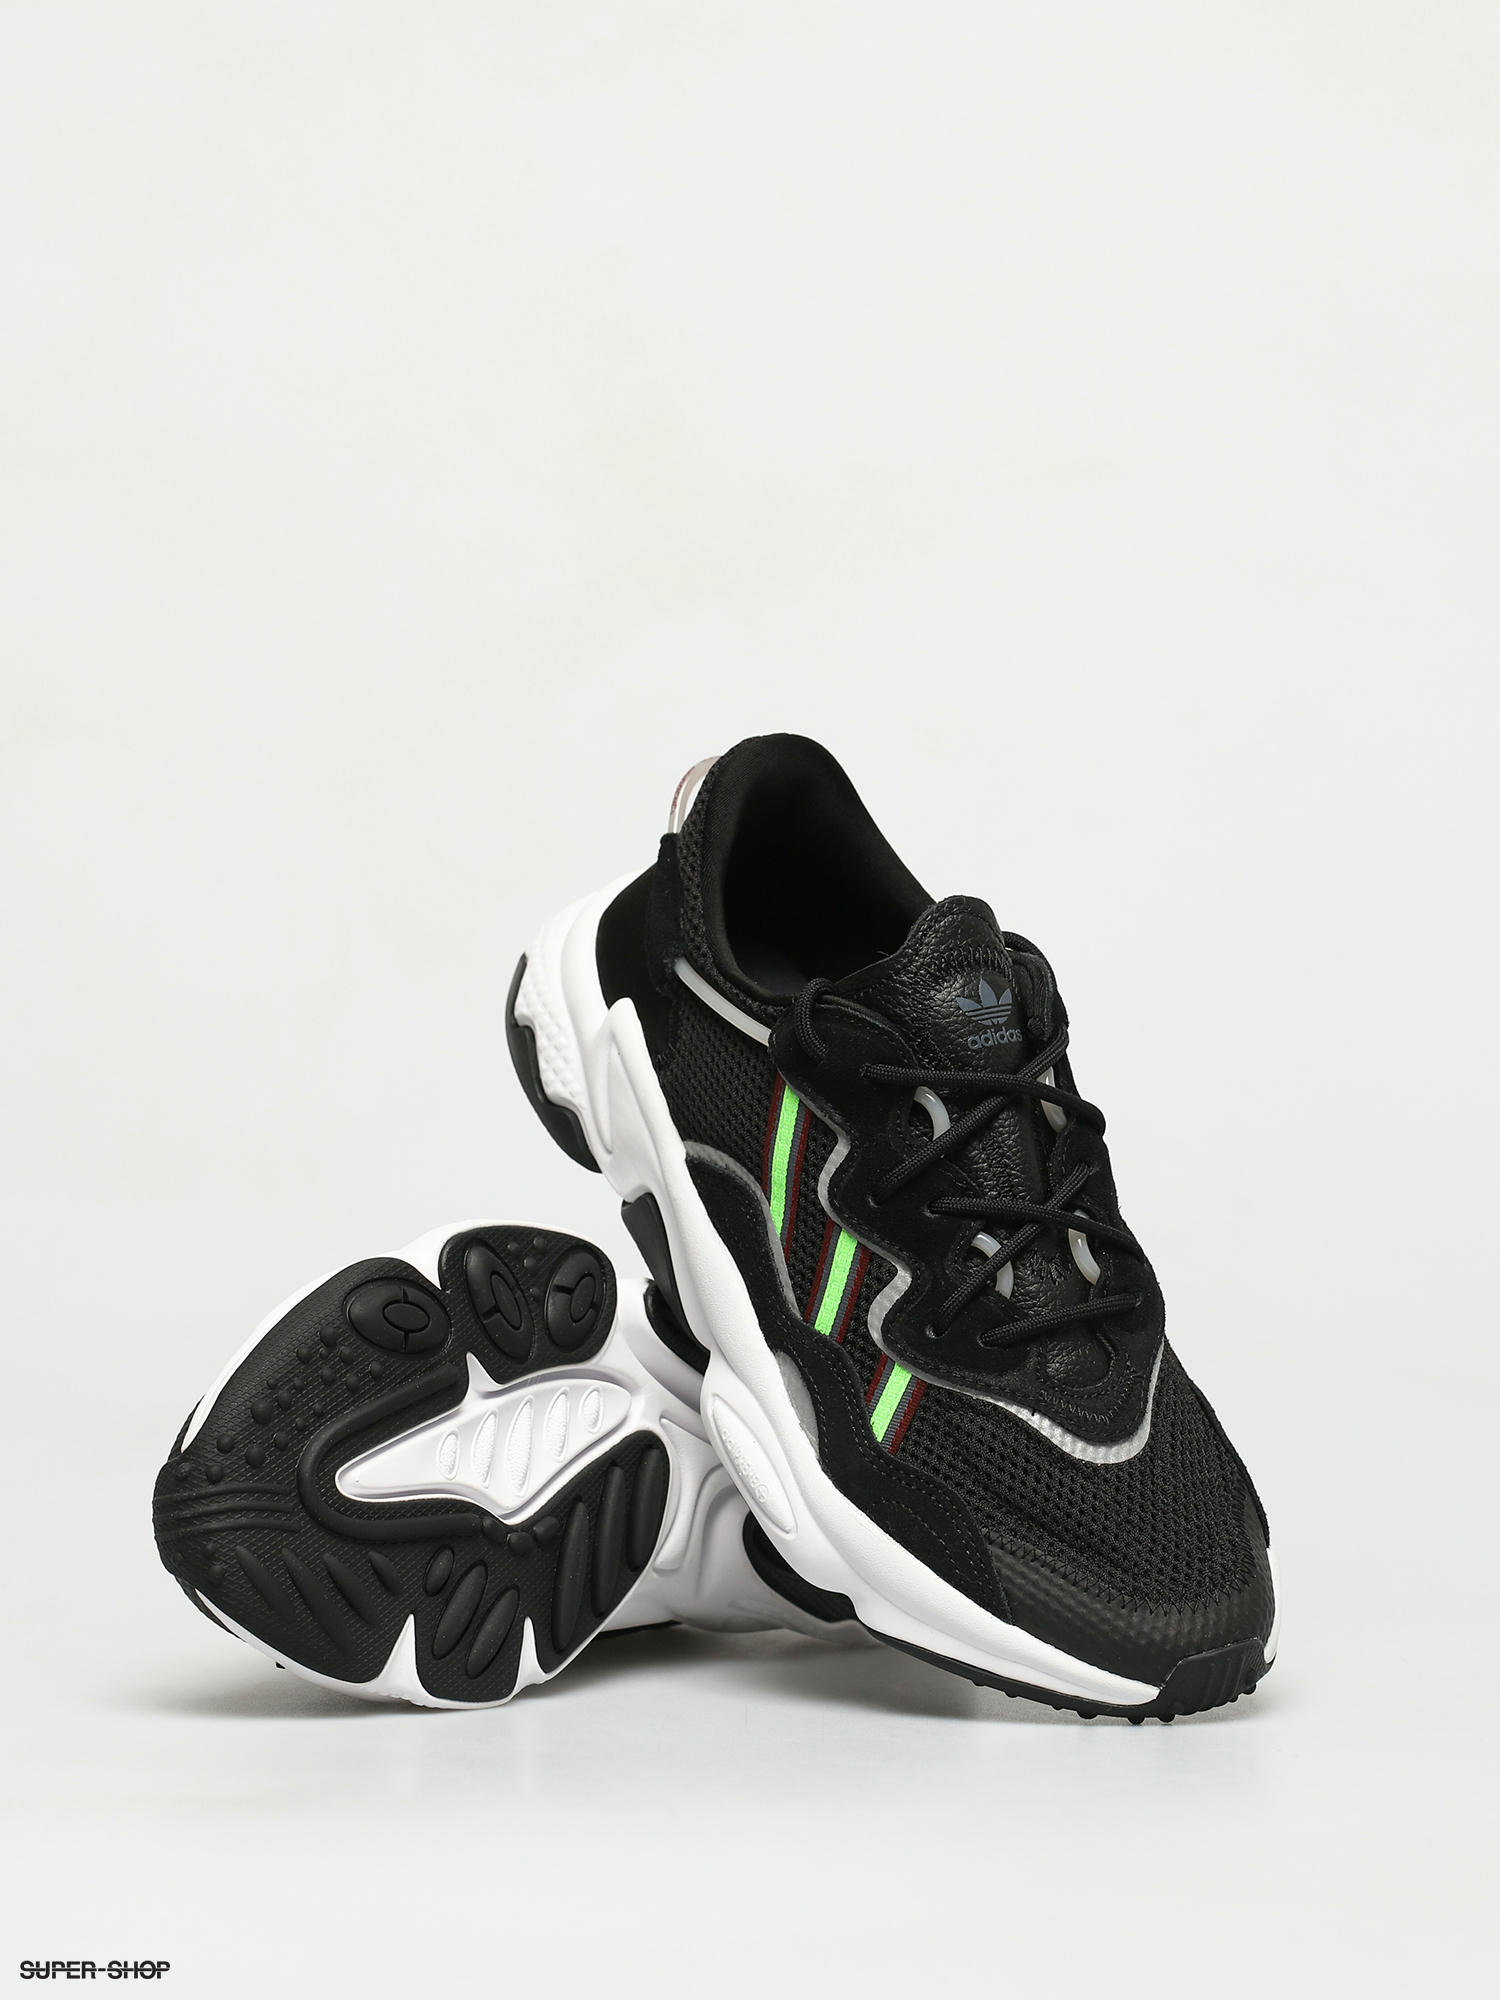 adidas ozweego black and green